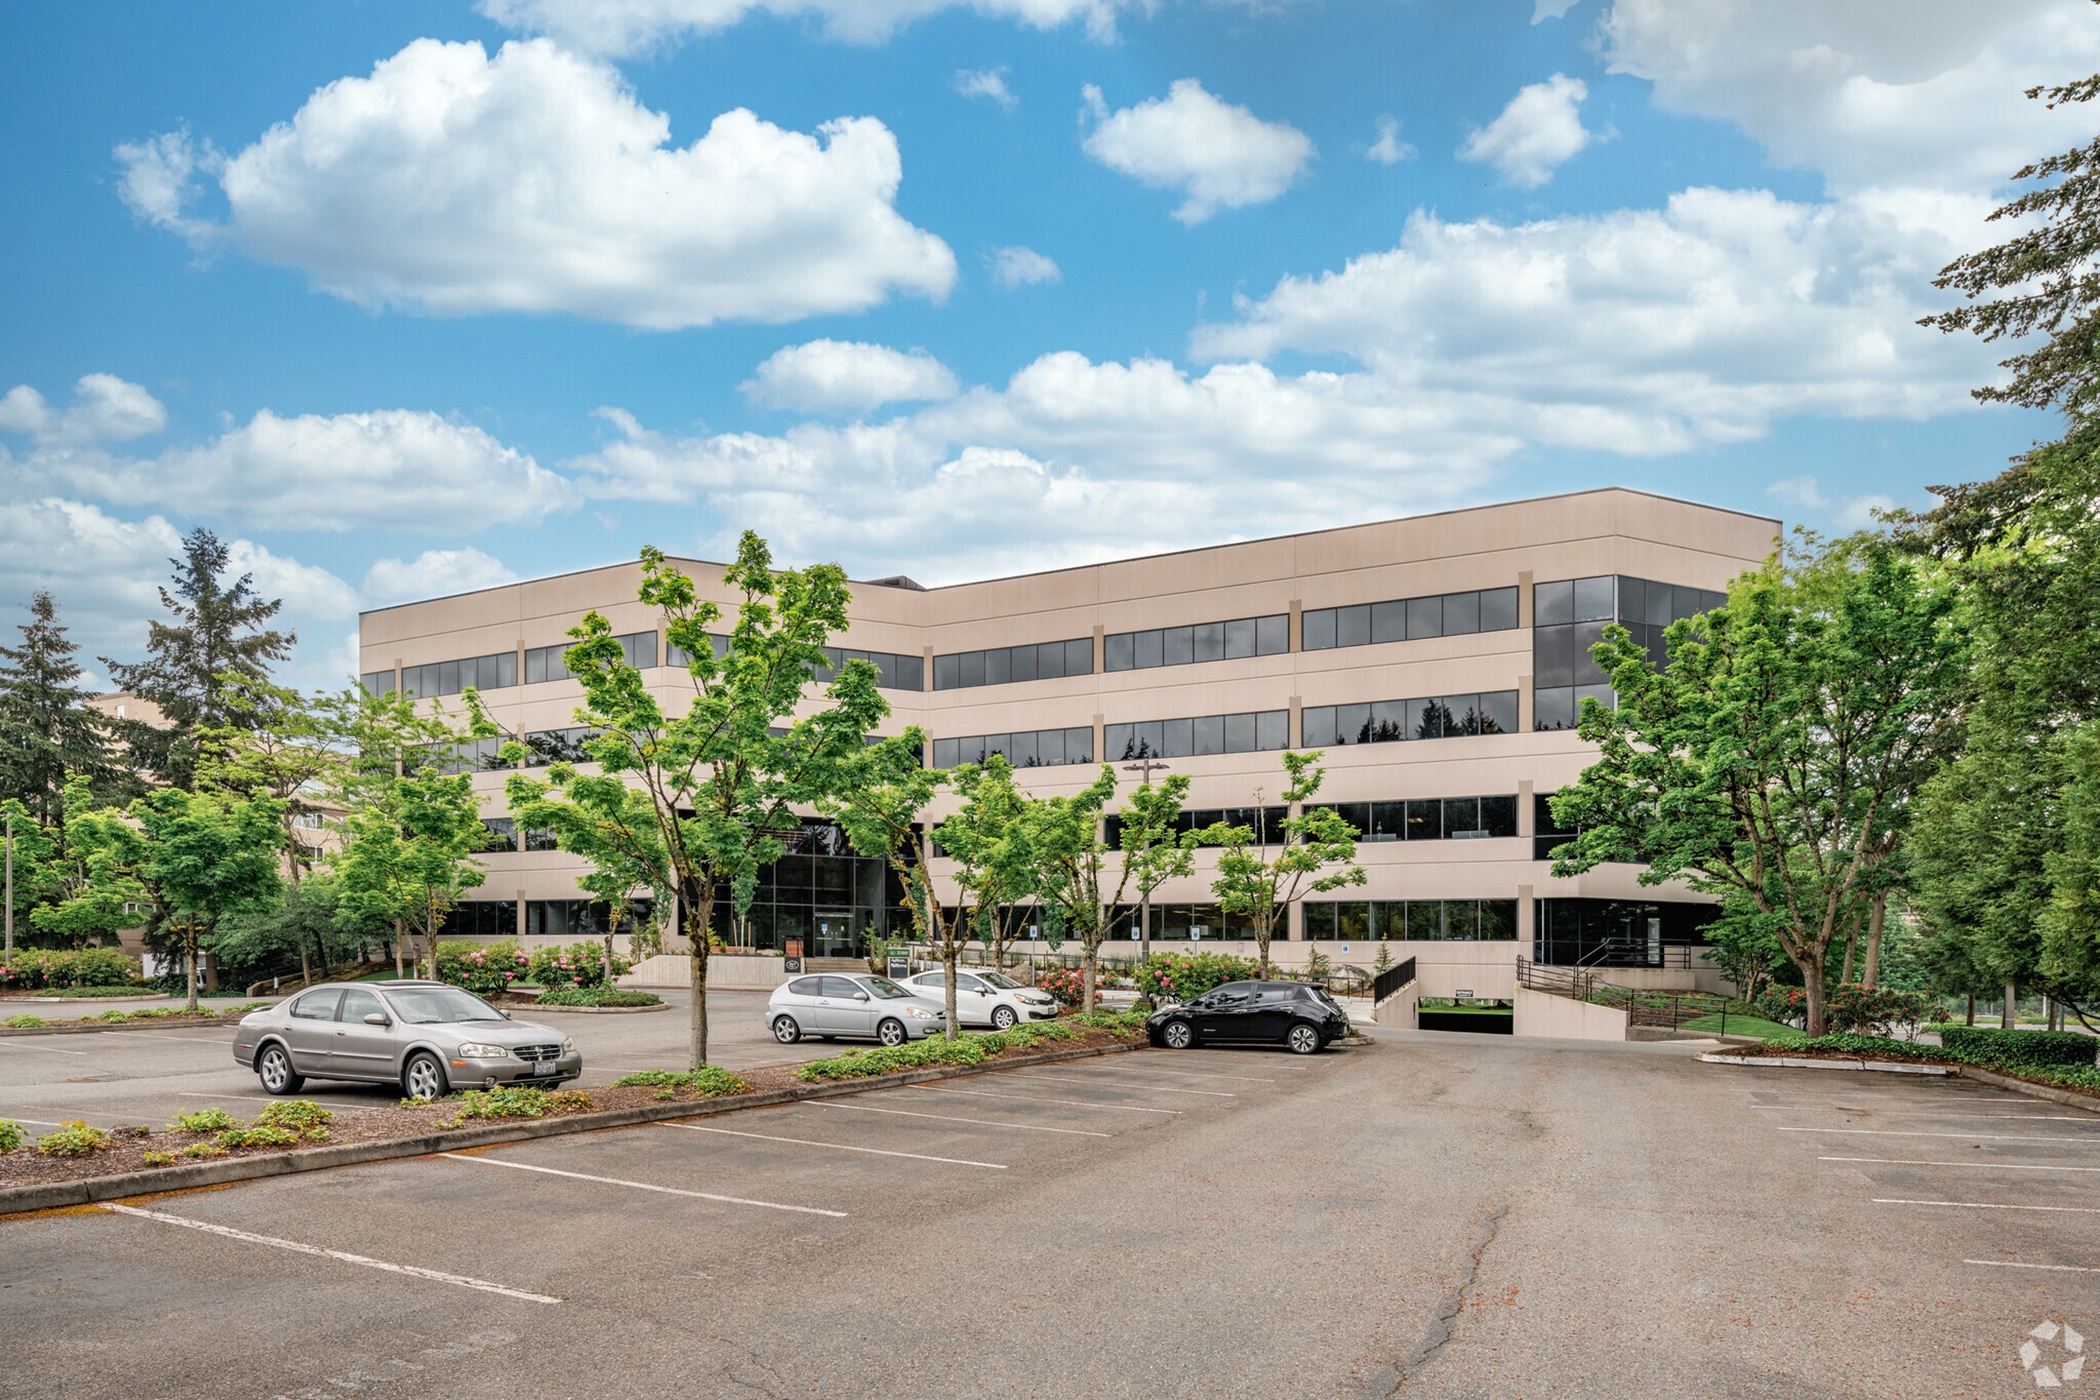 Blue Nile Inc.'s corporate headquarters is in Bellevue, Washington. (CoStar)